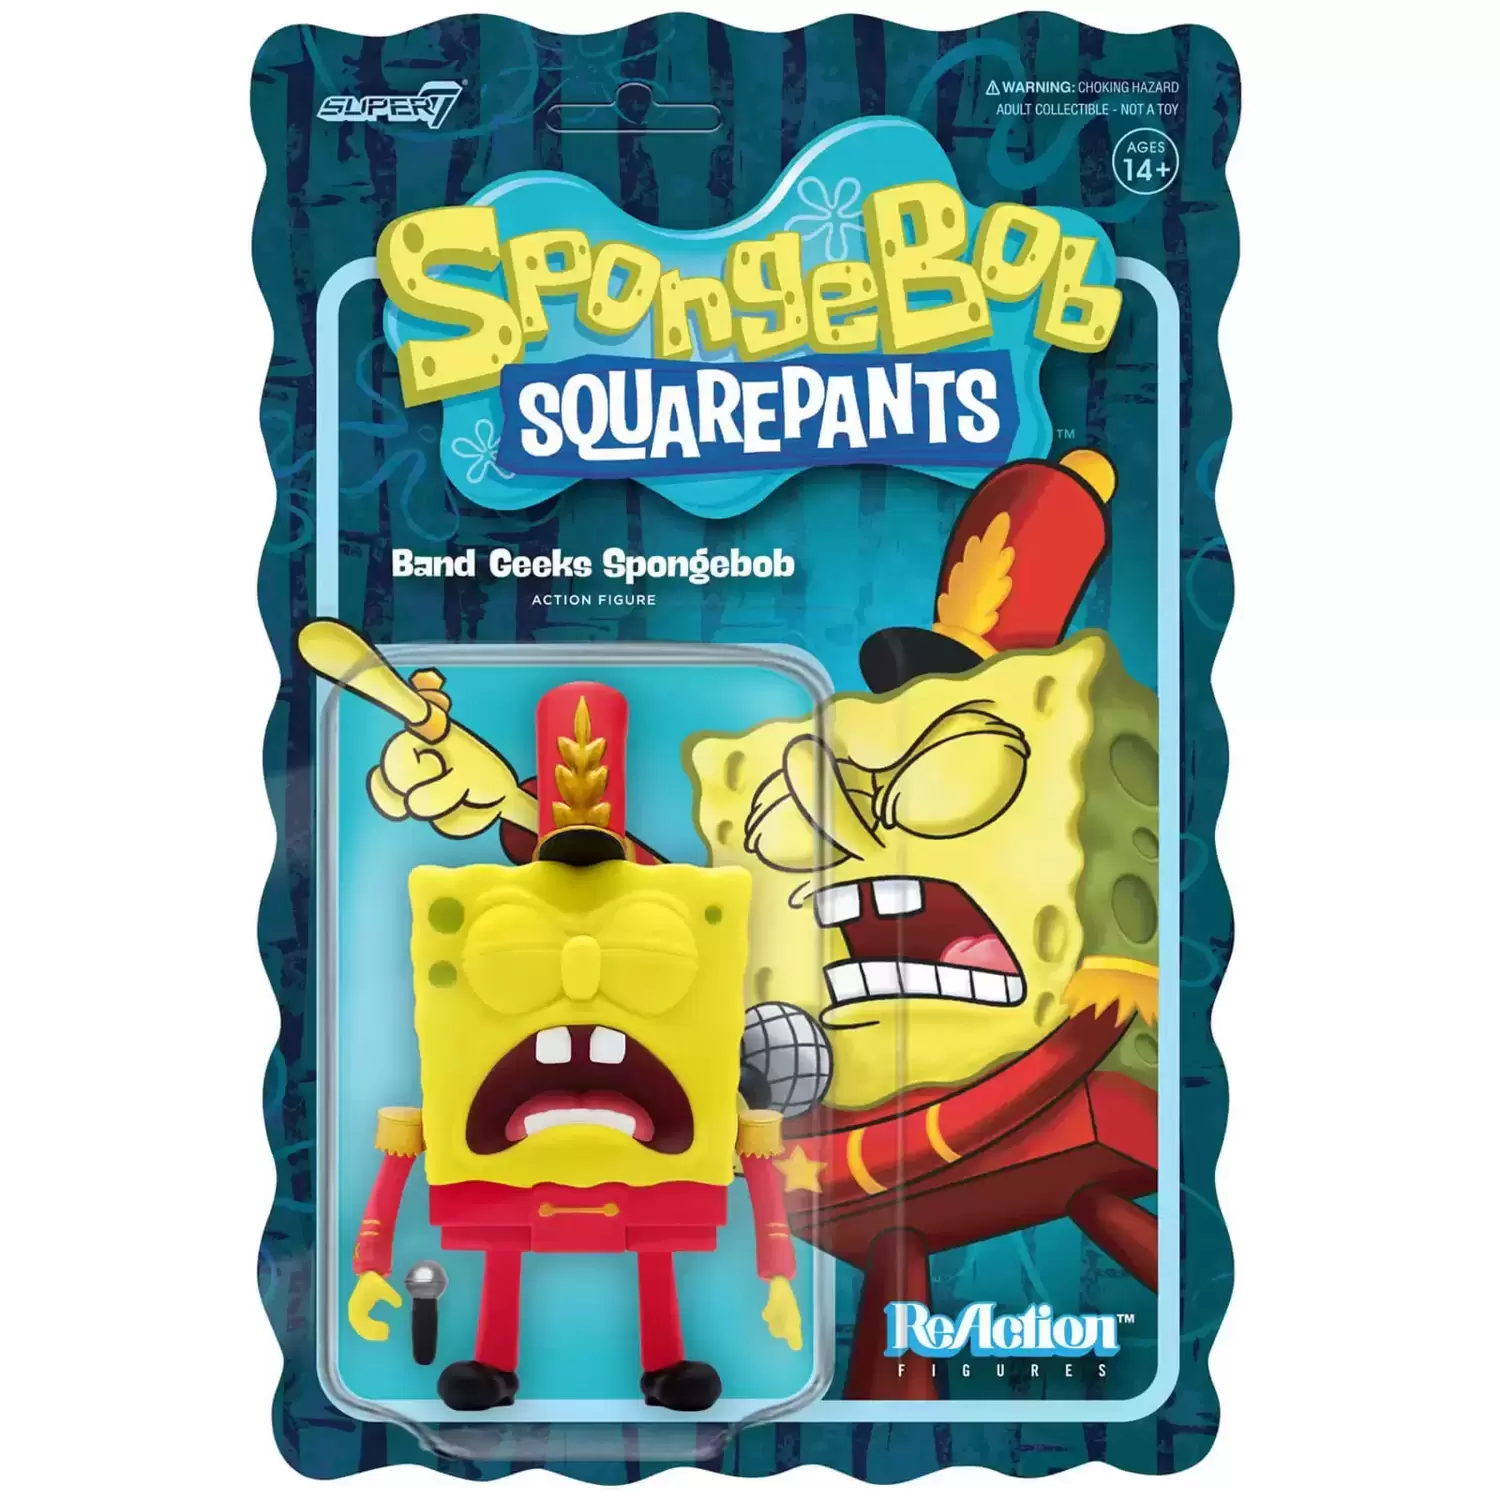 ReAction Figures - Spongebob Squarepants - Band Geeks SpongeBob